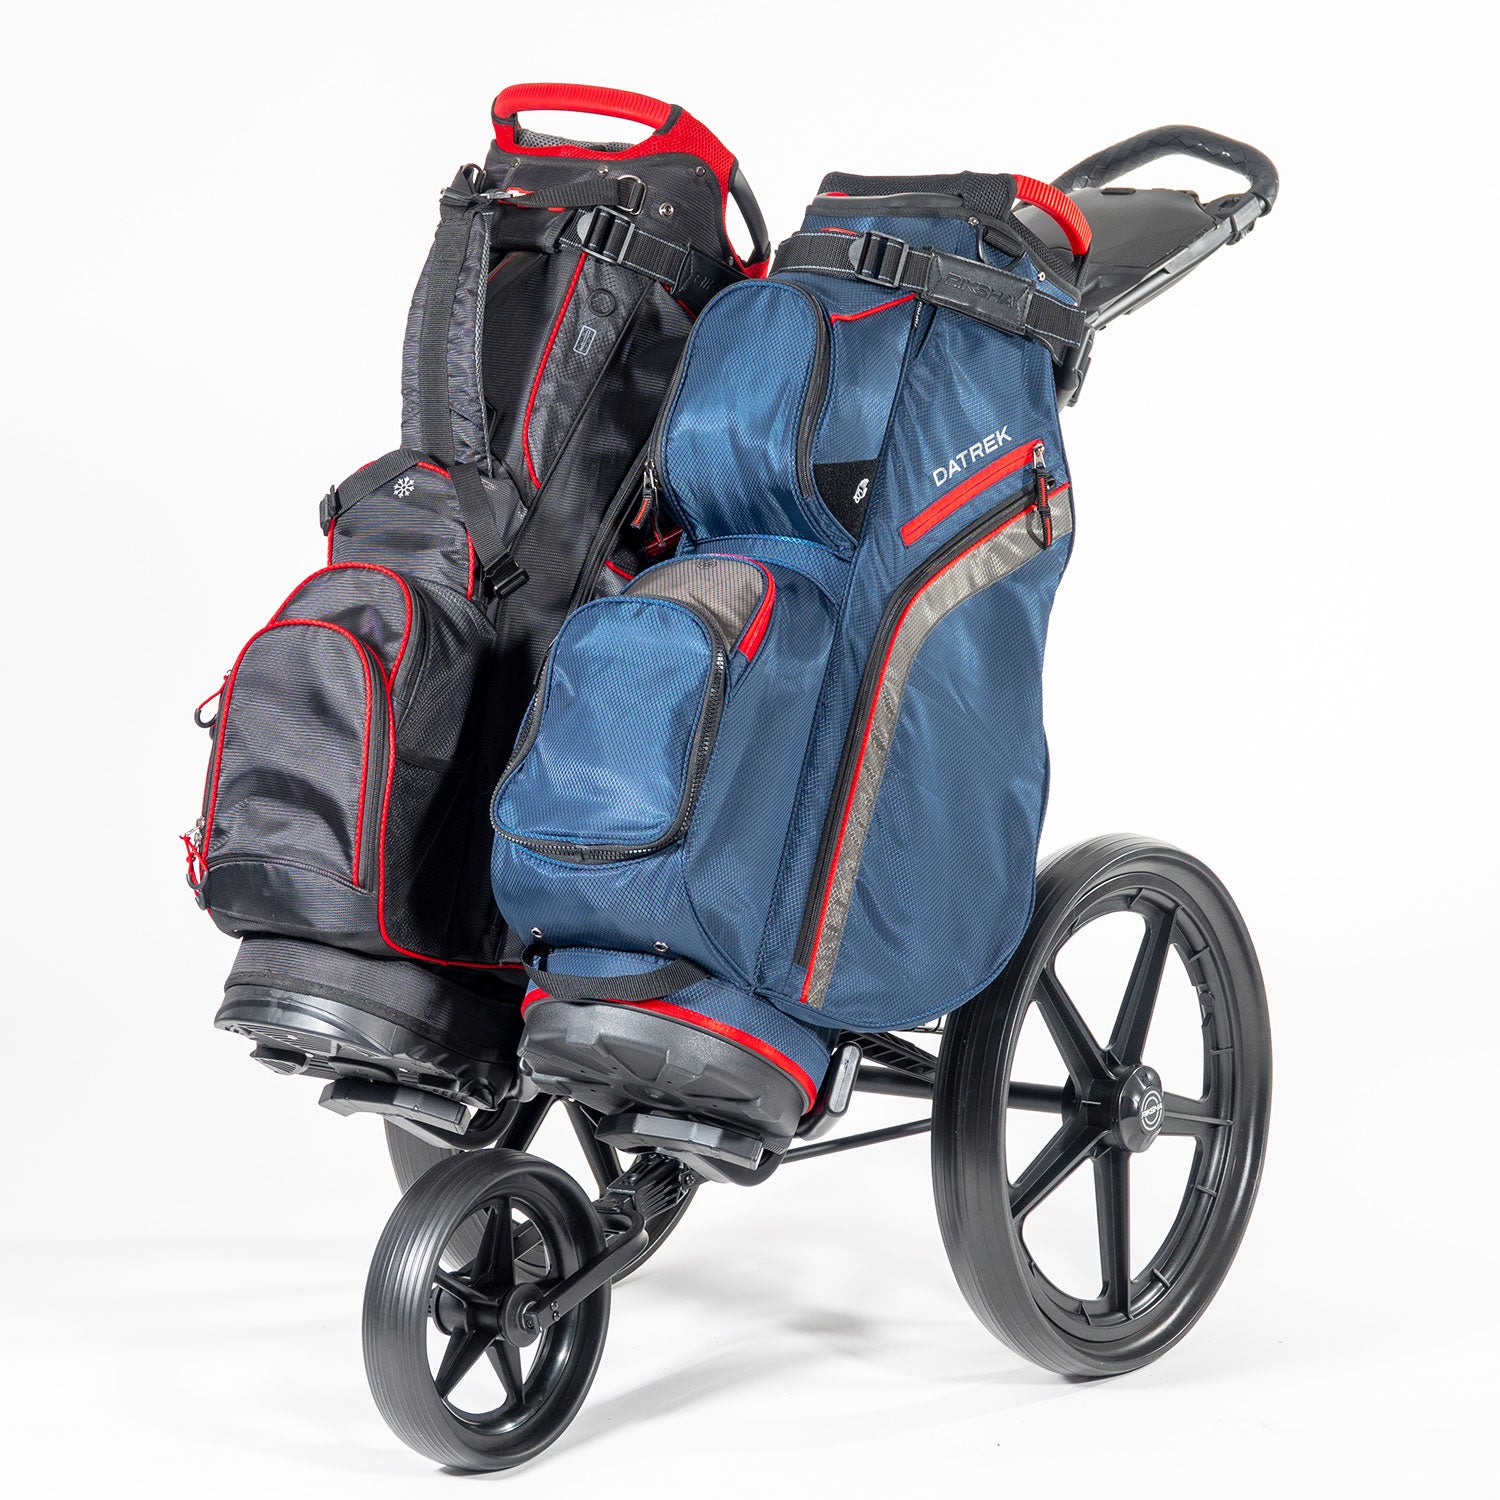 Riksha R-2000 3-Wheel Double Bag Rental Cart